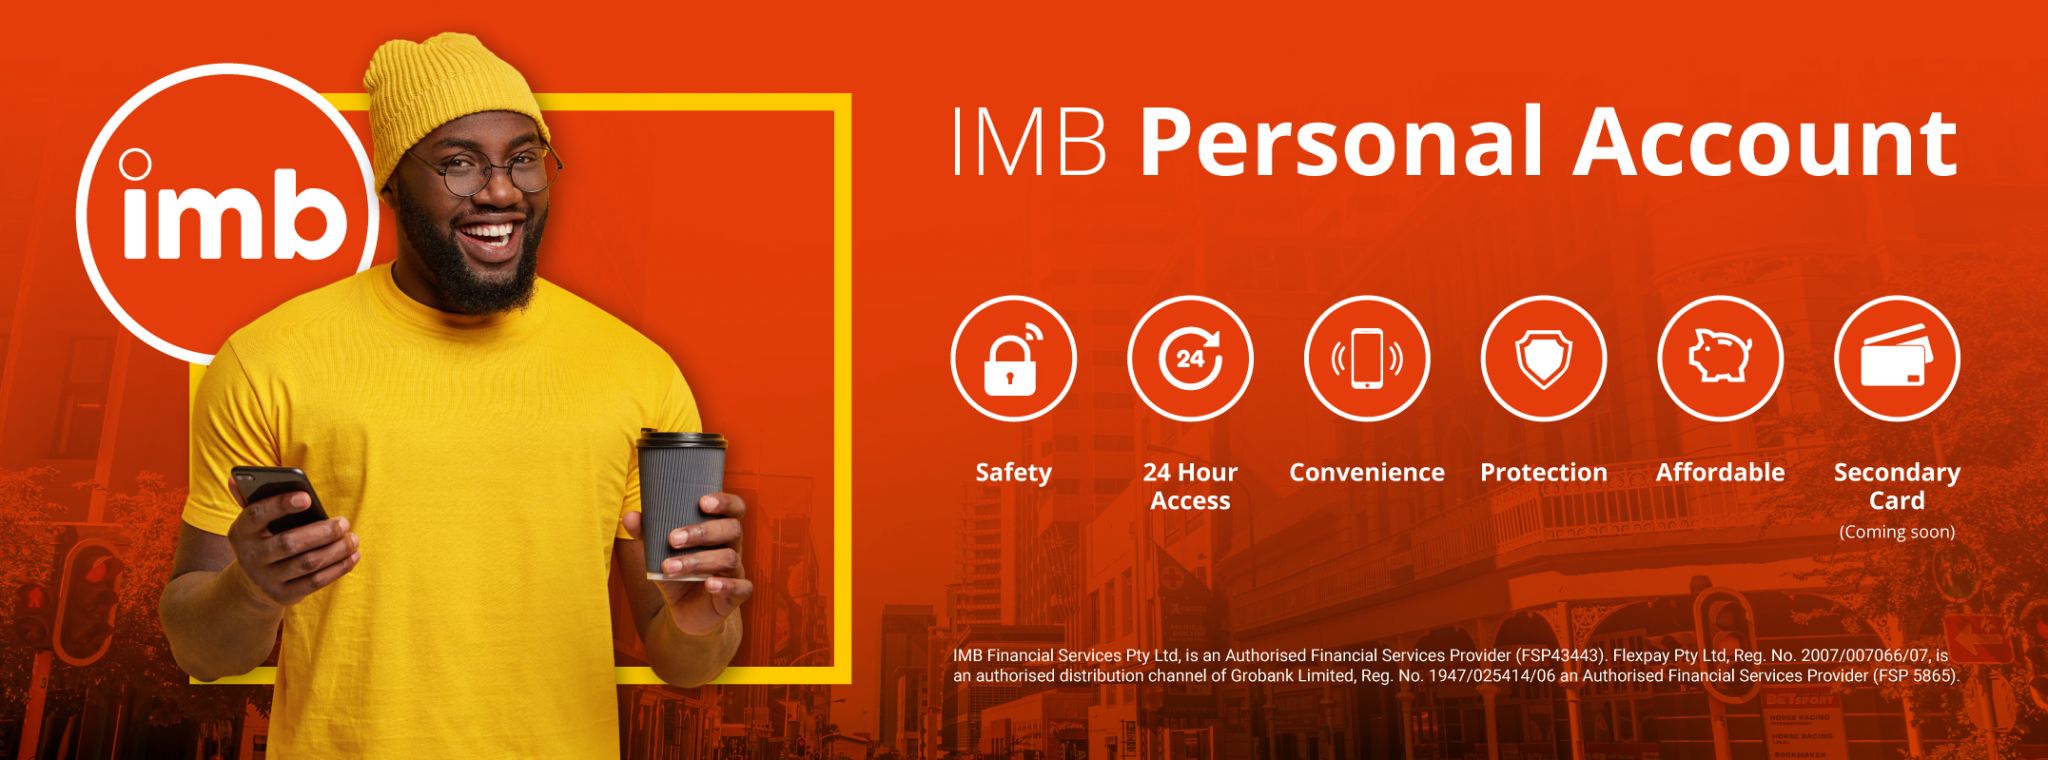 IMB Personal Account – IMB